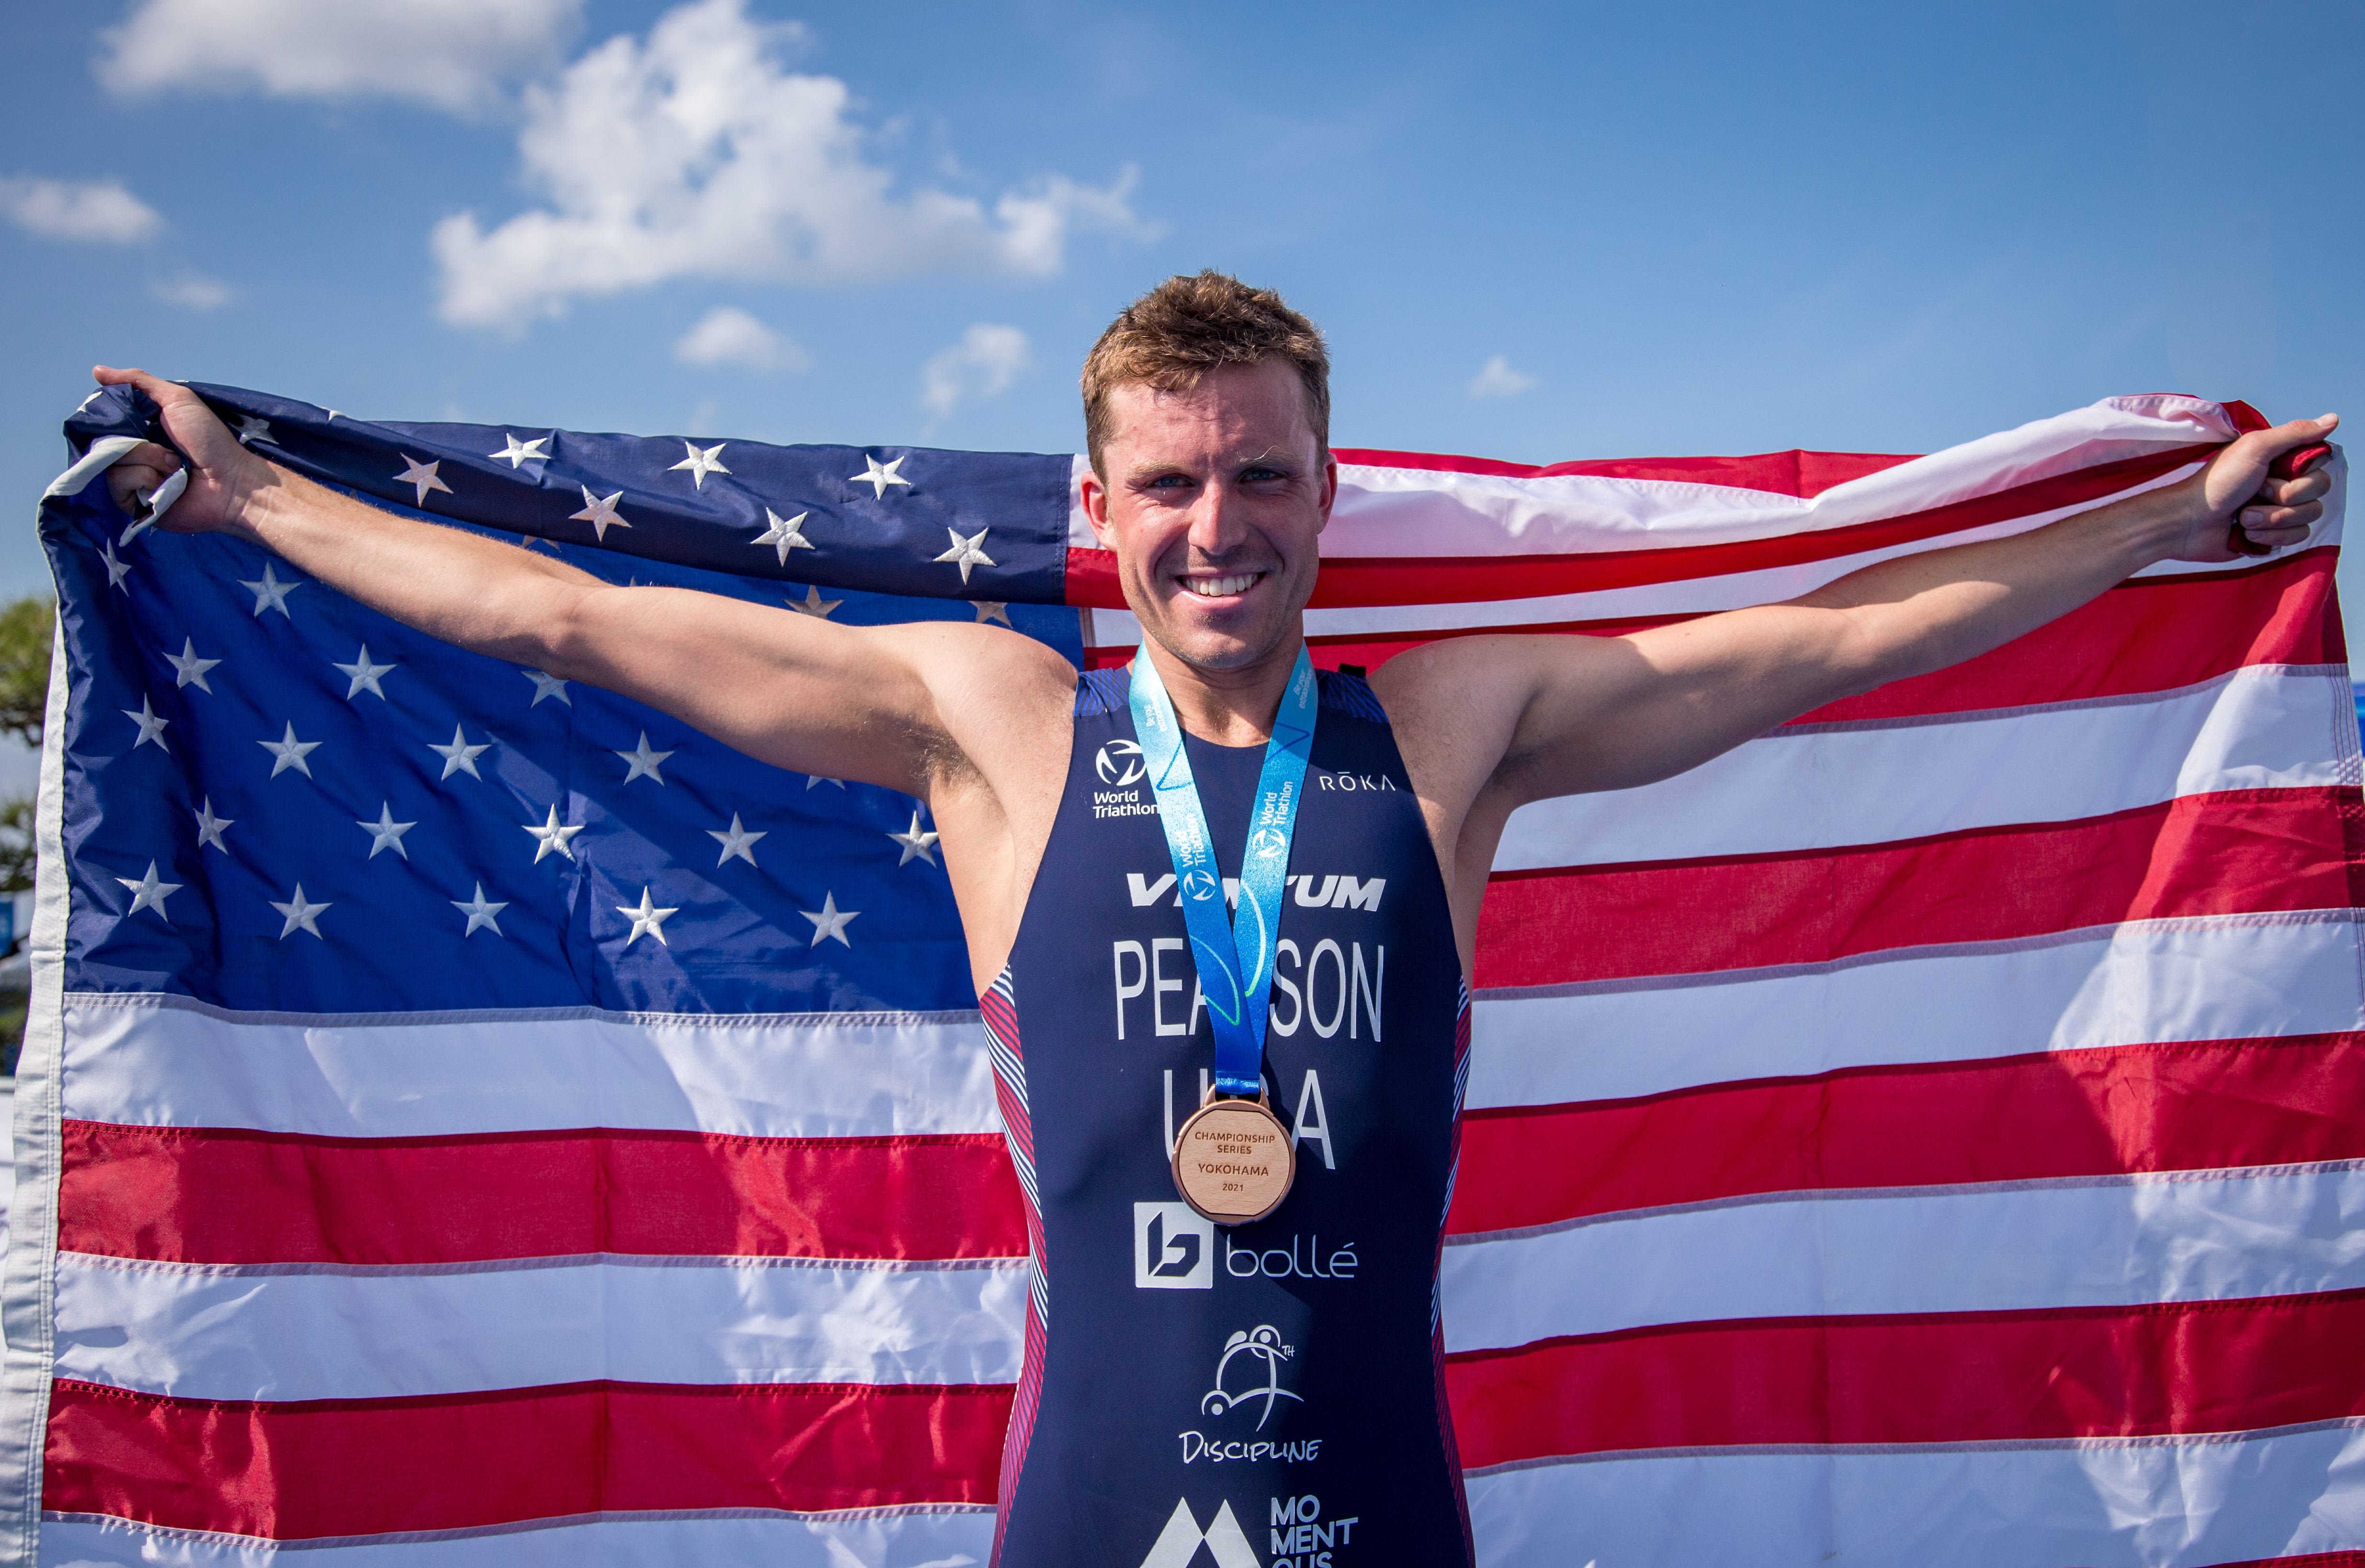 Delbarton's Morgan Pearson back in Olympic triathlon for Team USA. Can he medal again?